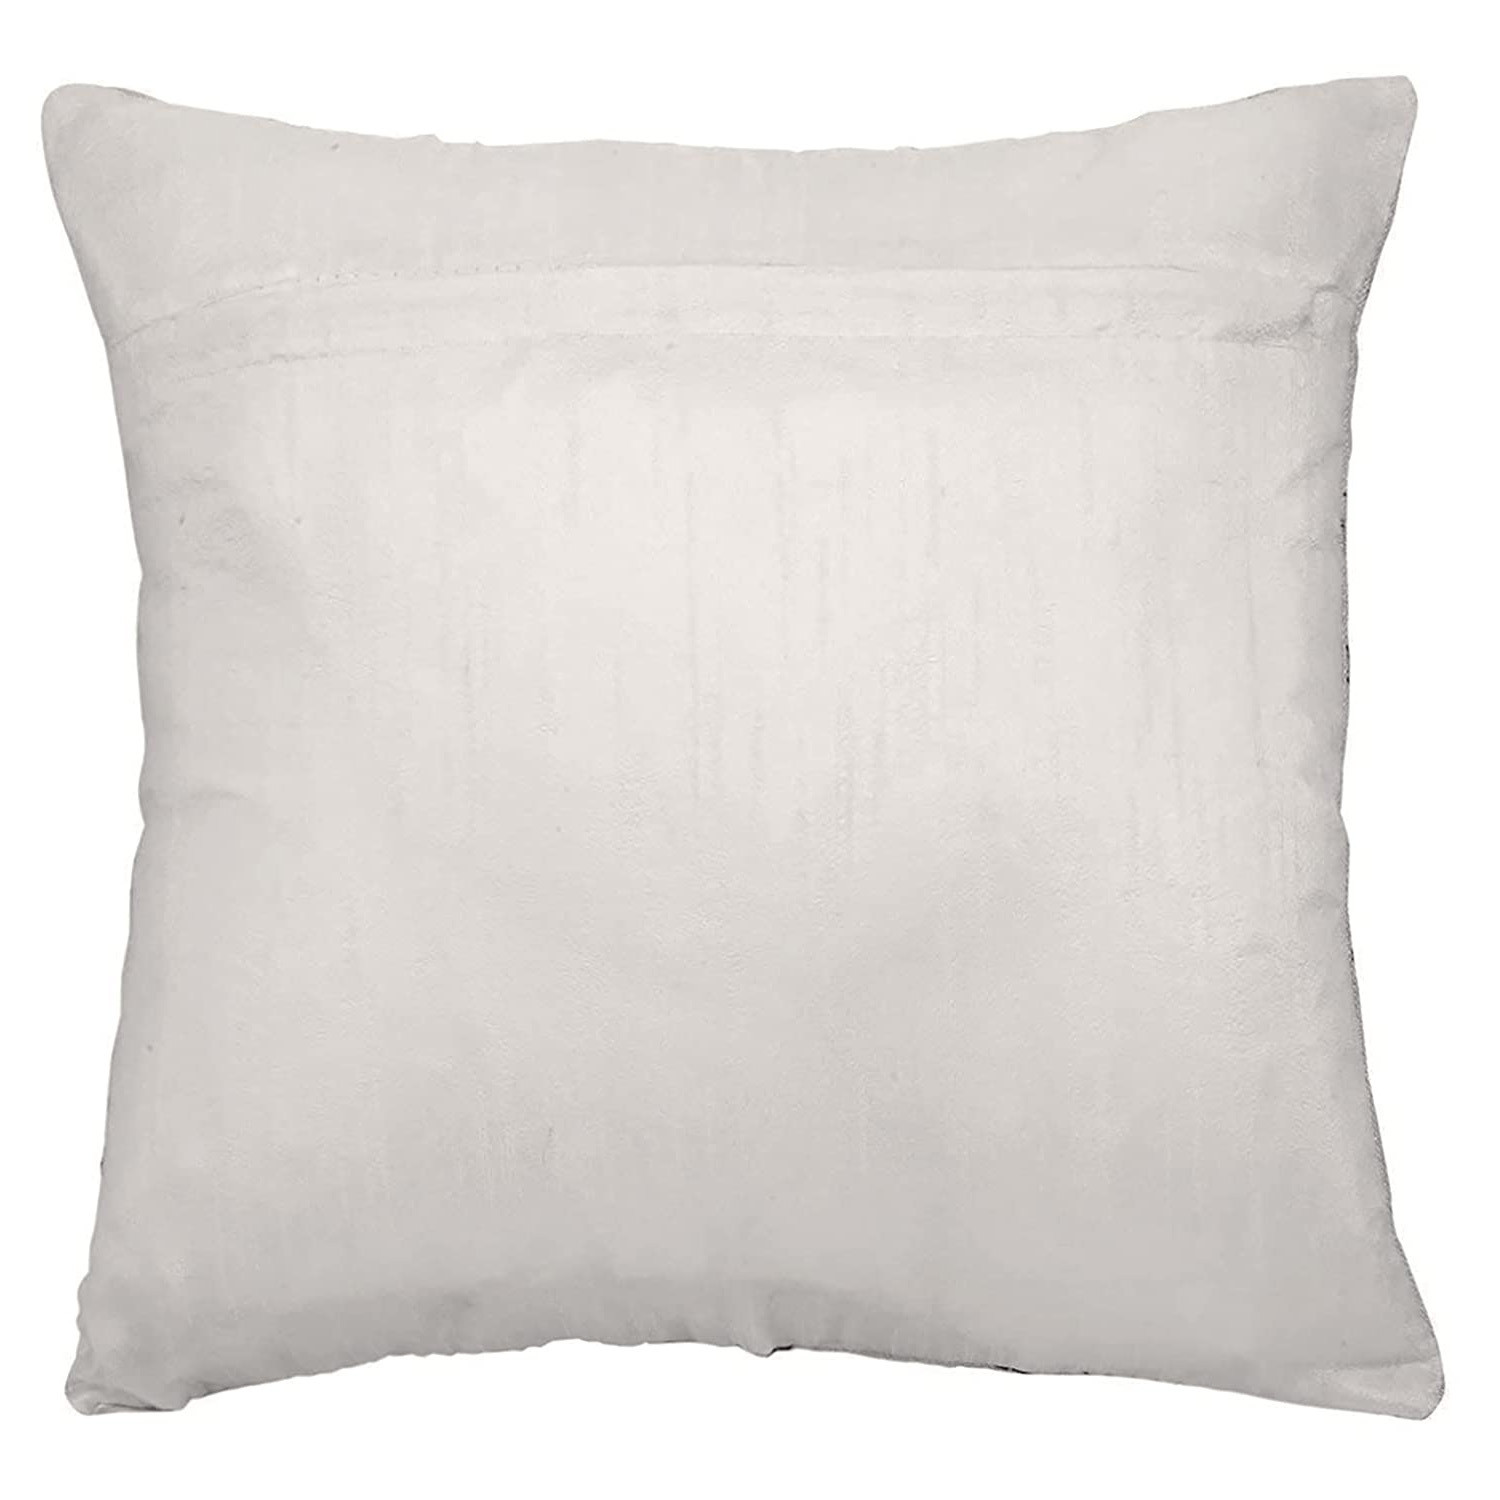 Kuber Industries Cushion Cover|Sofa Cushion Covers|Ractangle Cushion Covers|Cushion Covers 16 inch x 16 inch|Cushion Cover Set of 5|(White)